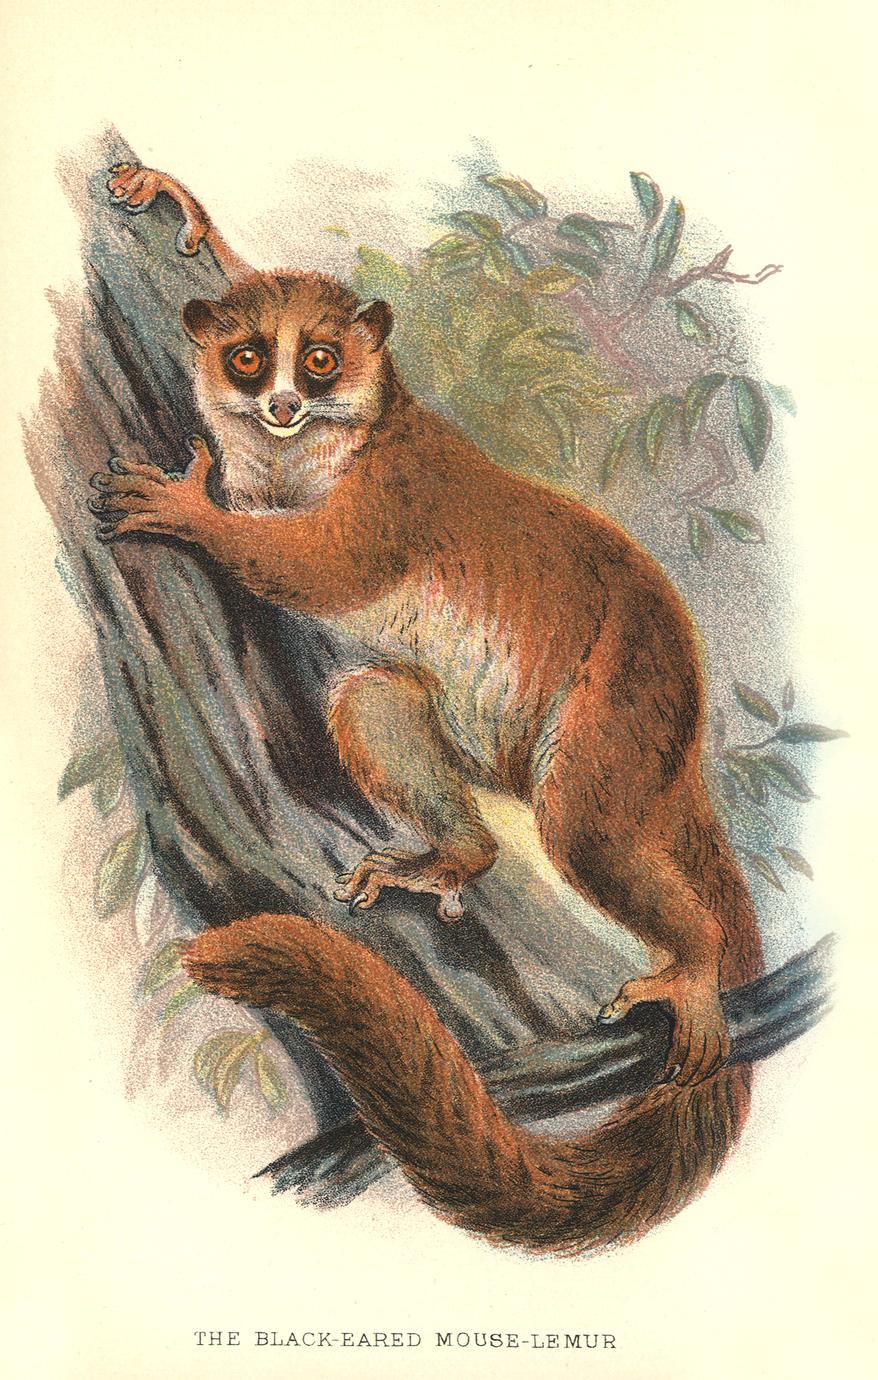 The Black-Eared Mouse-Lemur